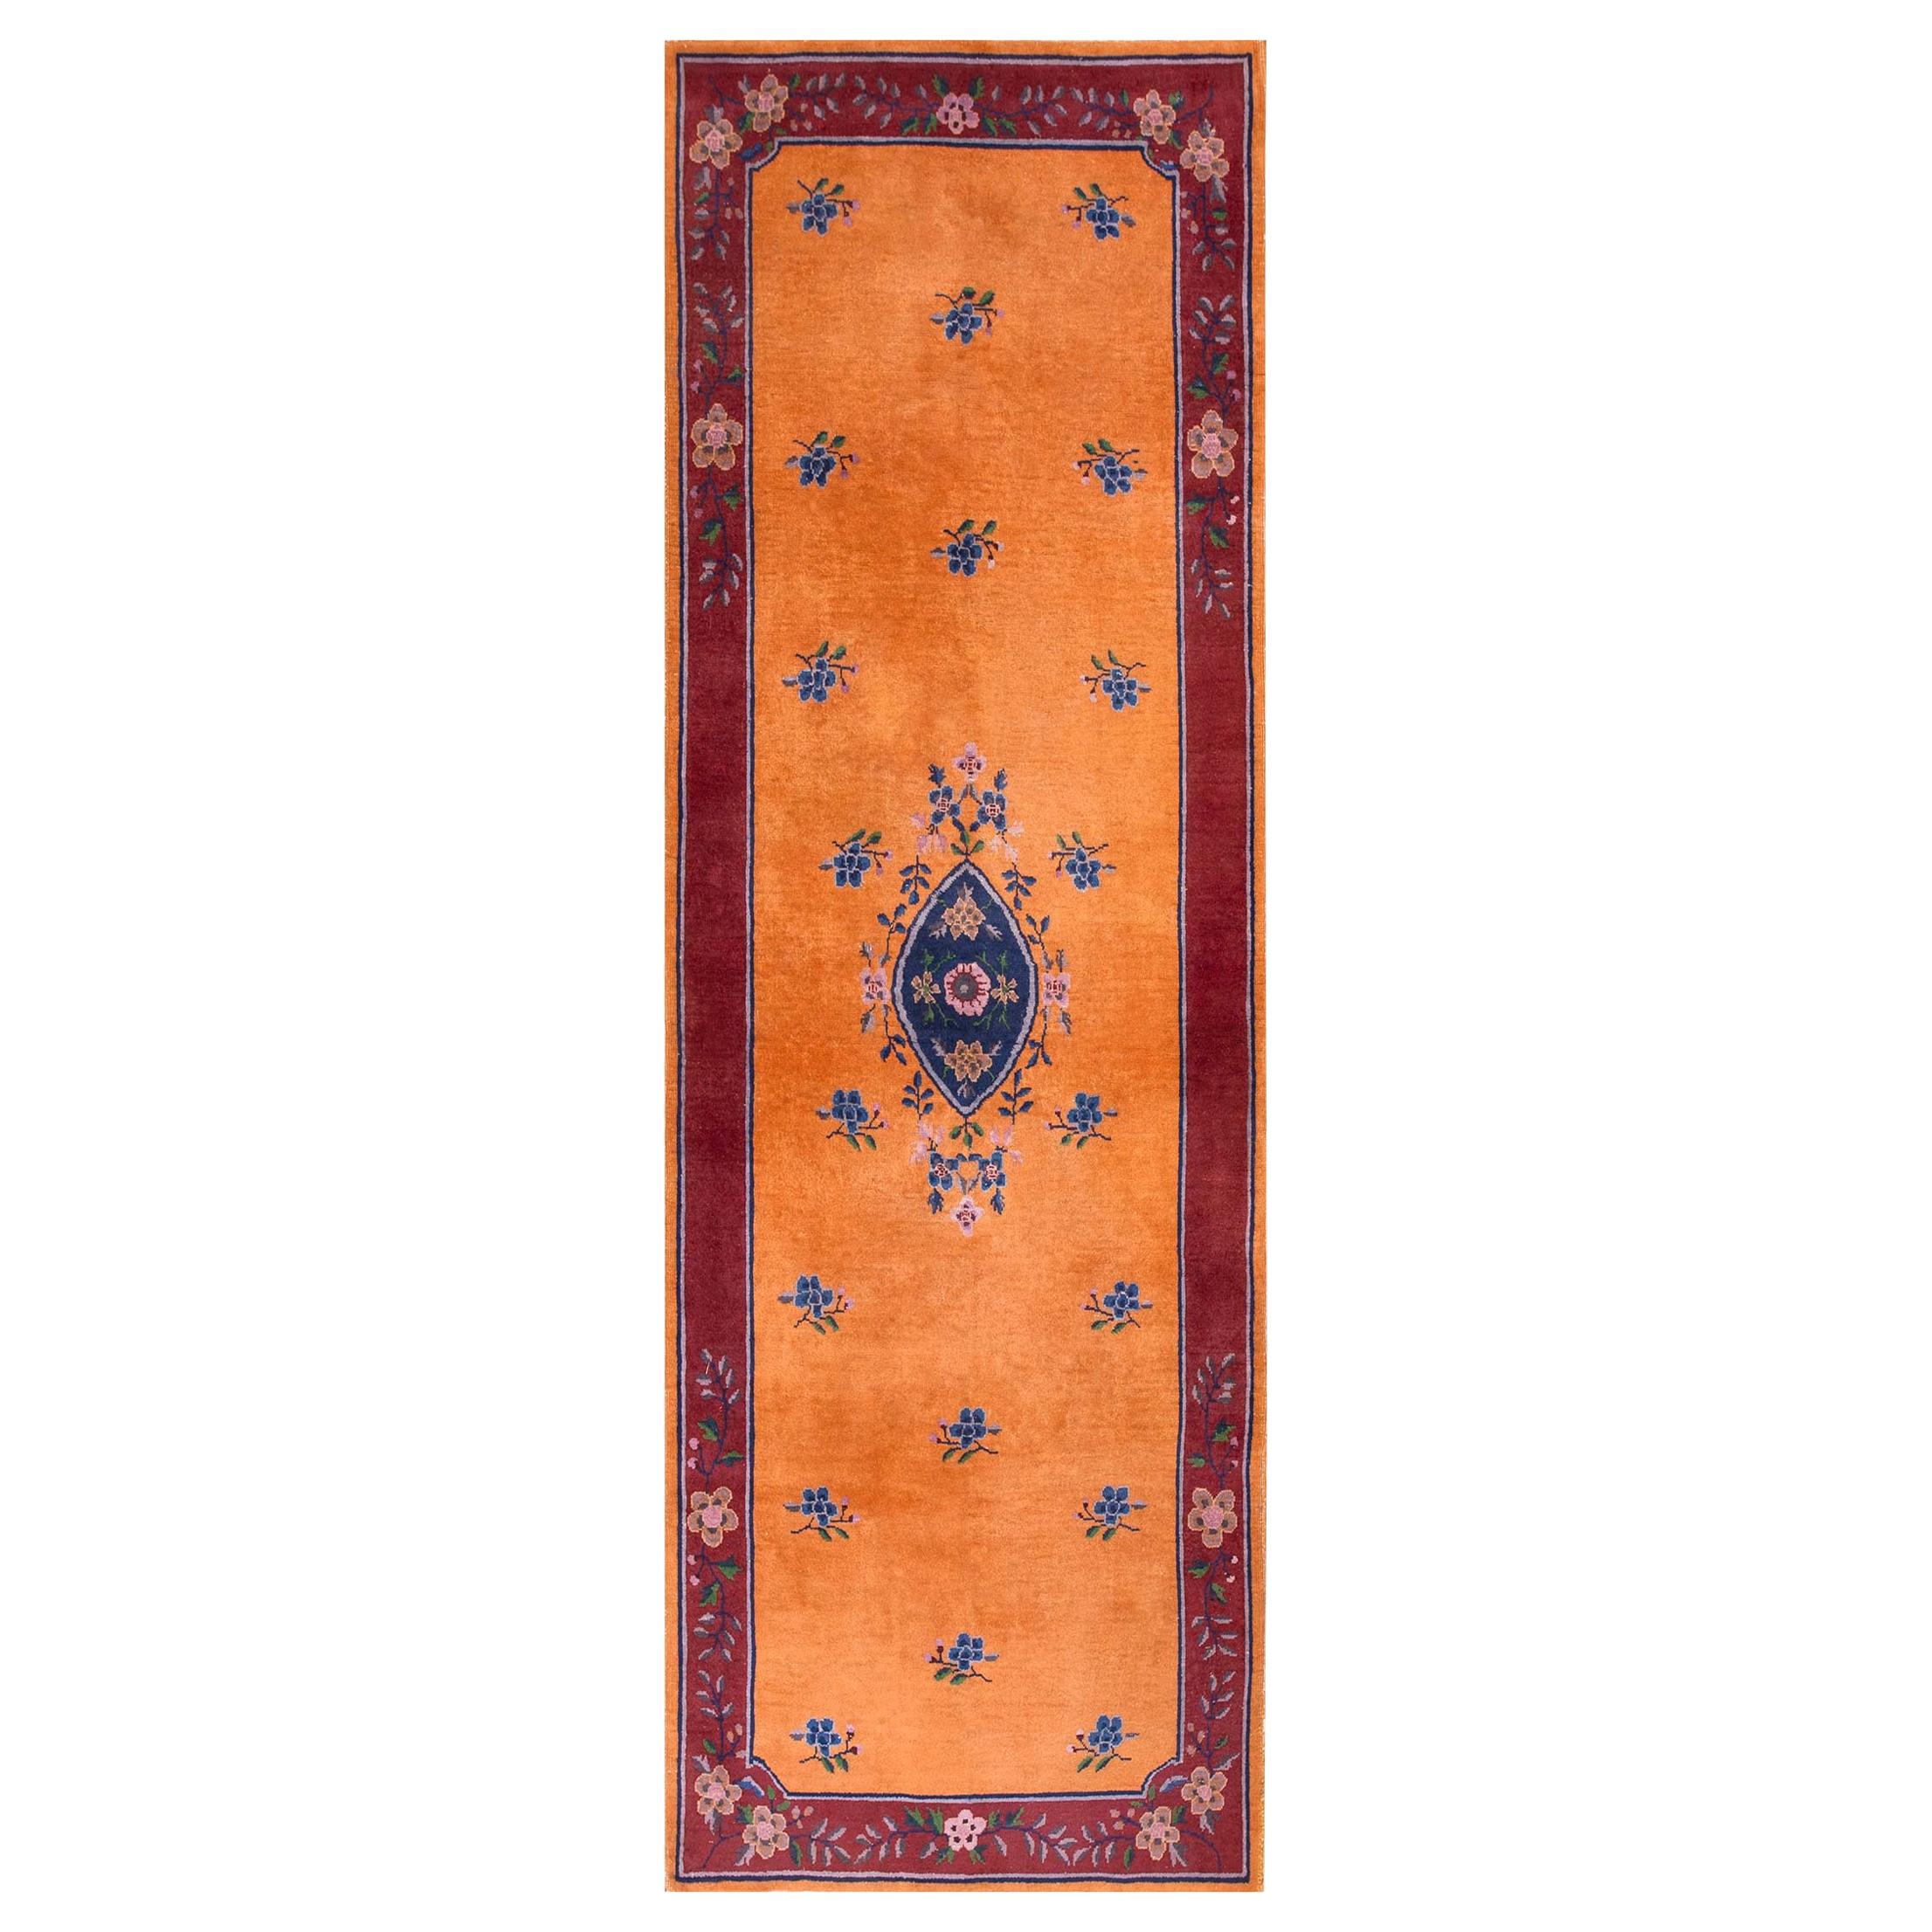 1920s Chinese Art Deco Carpet ( 4 x 10' - 122 x 305 )